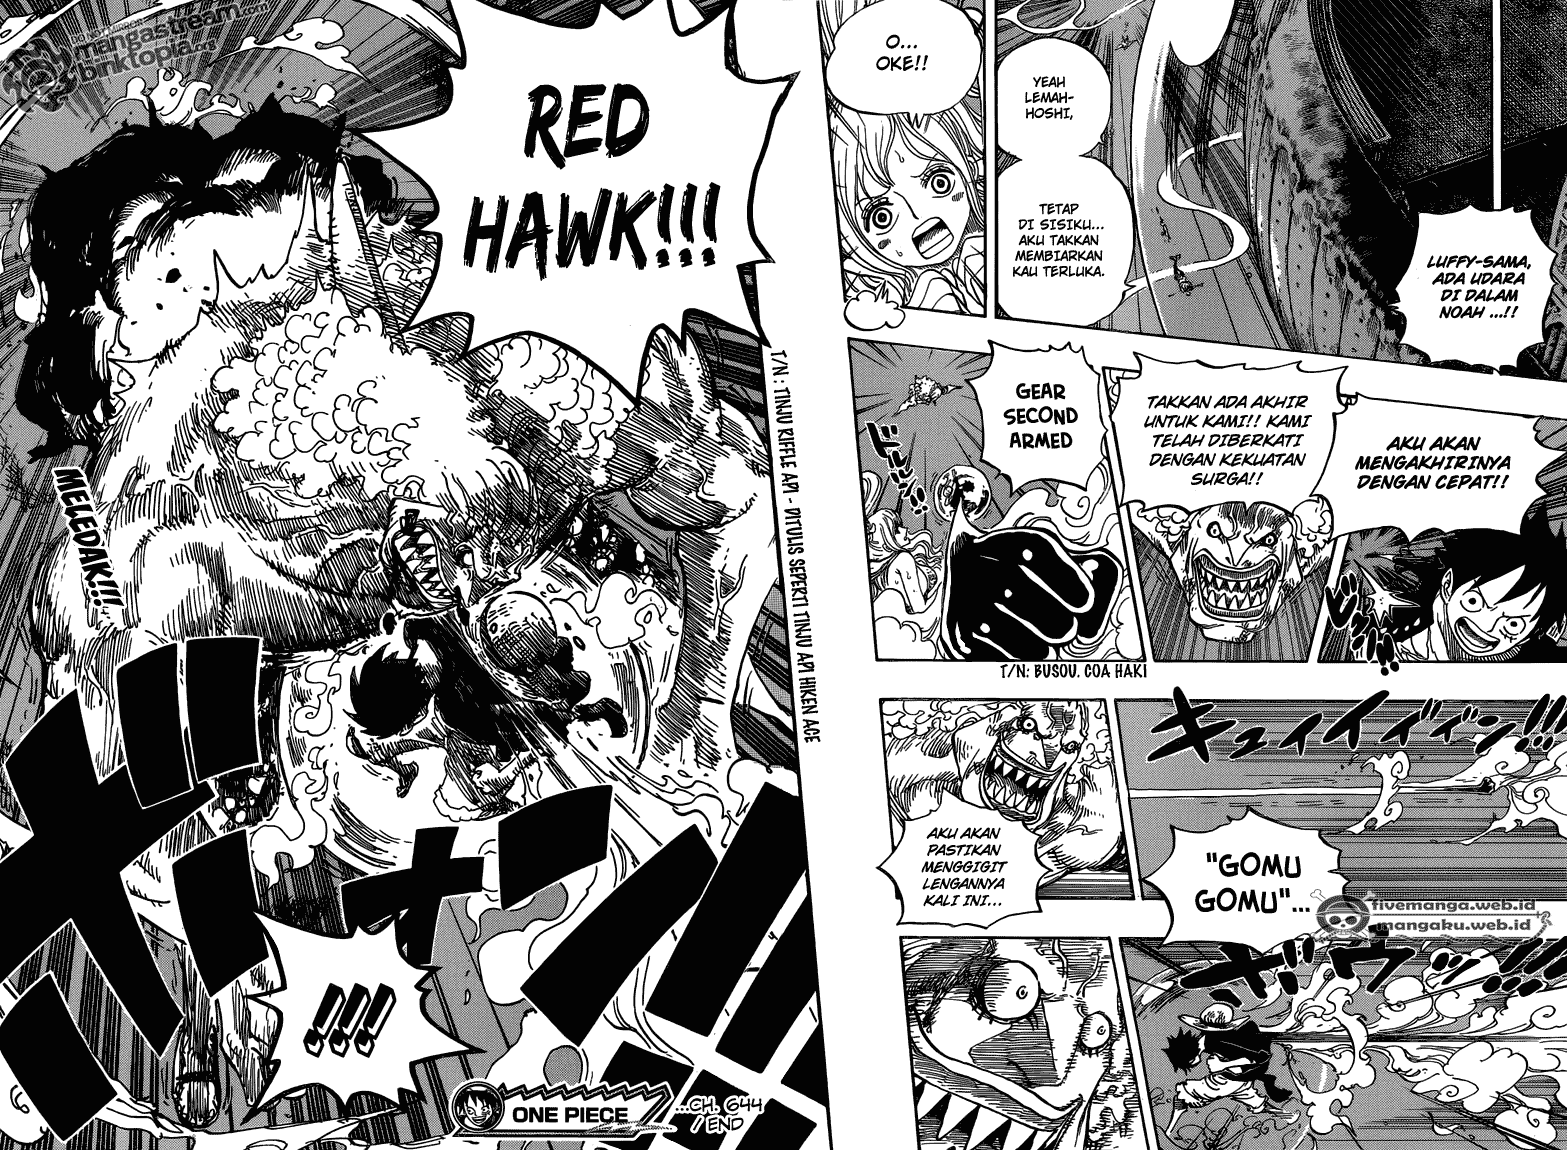 One Piece Chapter 644 – Kembali Ke Awal - 157